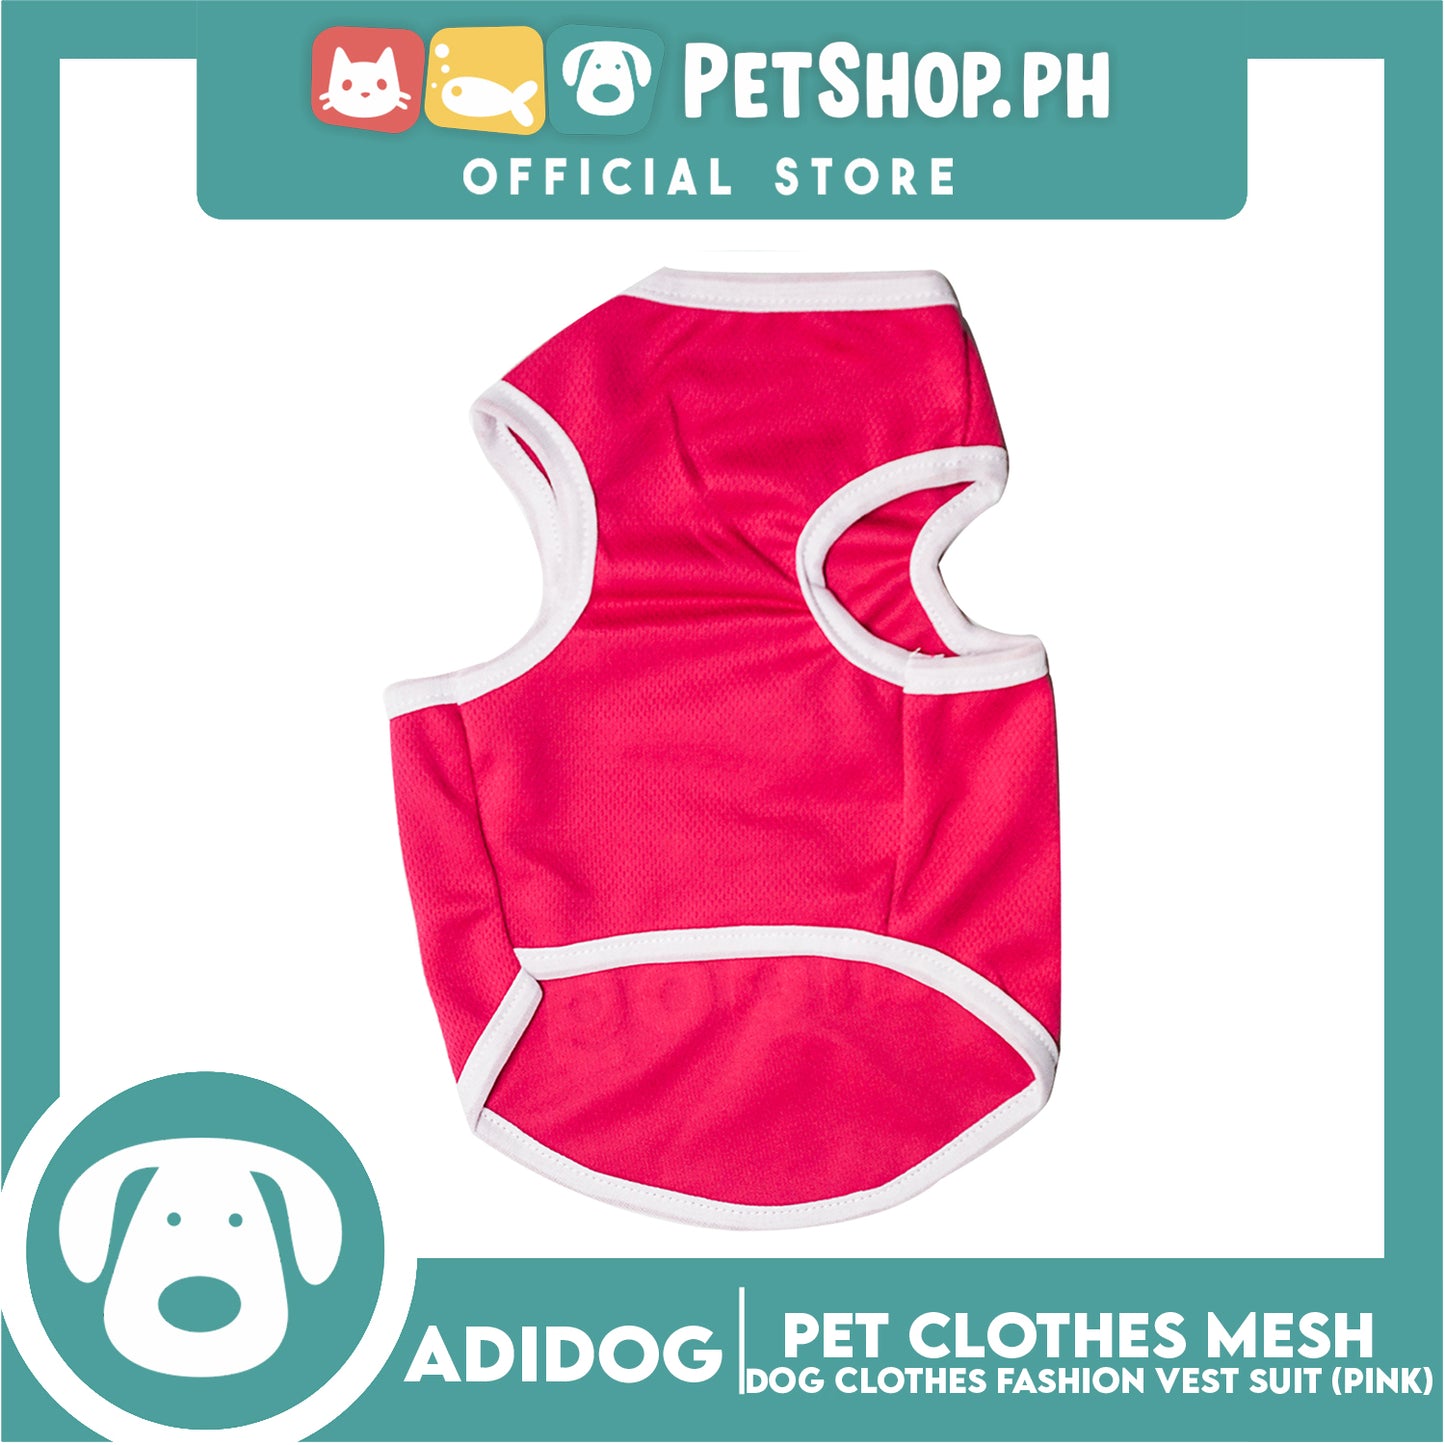 Adidog Pet Clothes Mesh Vet, Summer Dog Clothes, Breathable Mesh Vet, Dog Shirt, Pet Jersey, Fashion Vest Suit for Dogs (Pink) (Large)